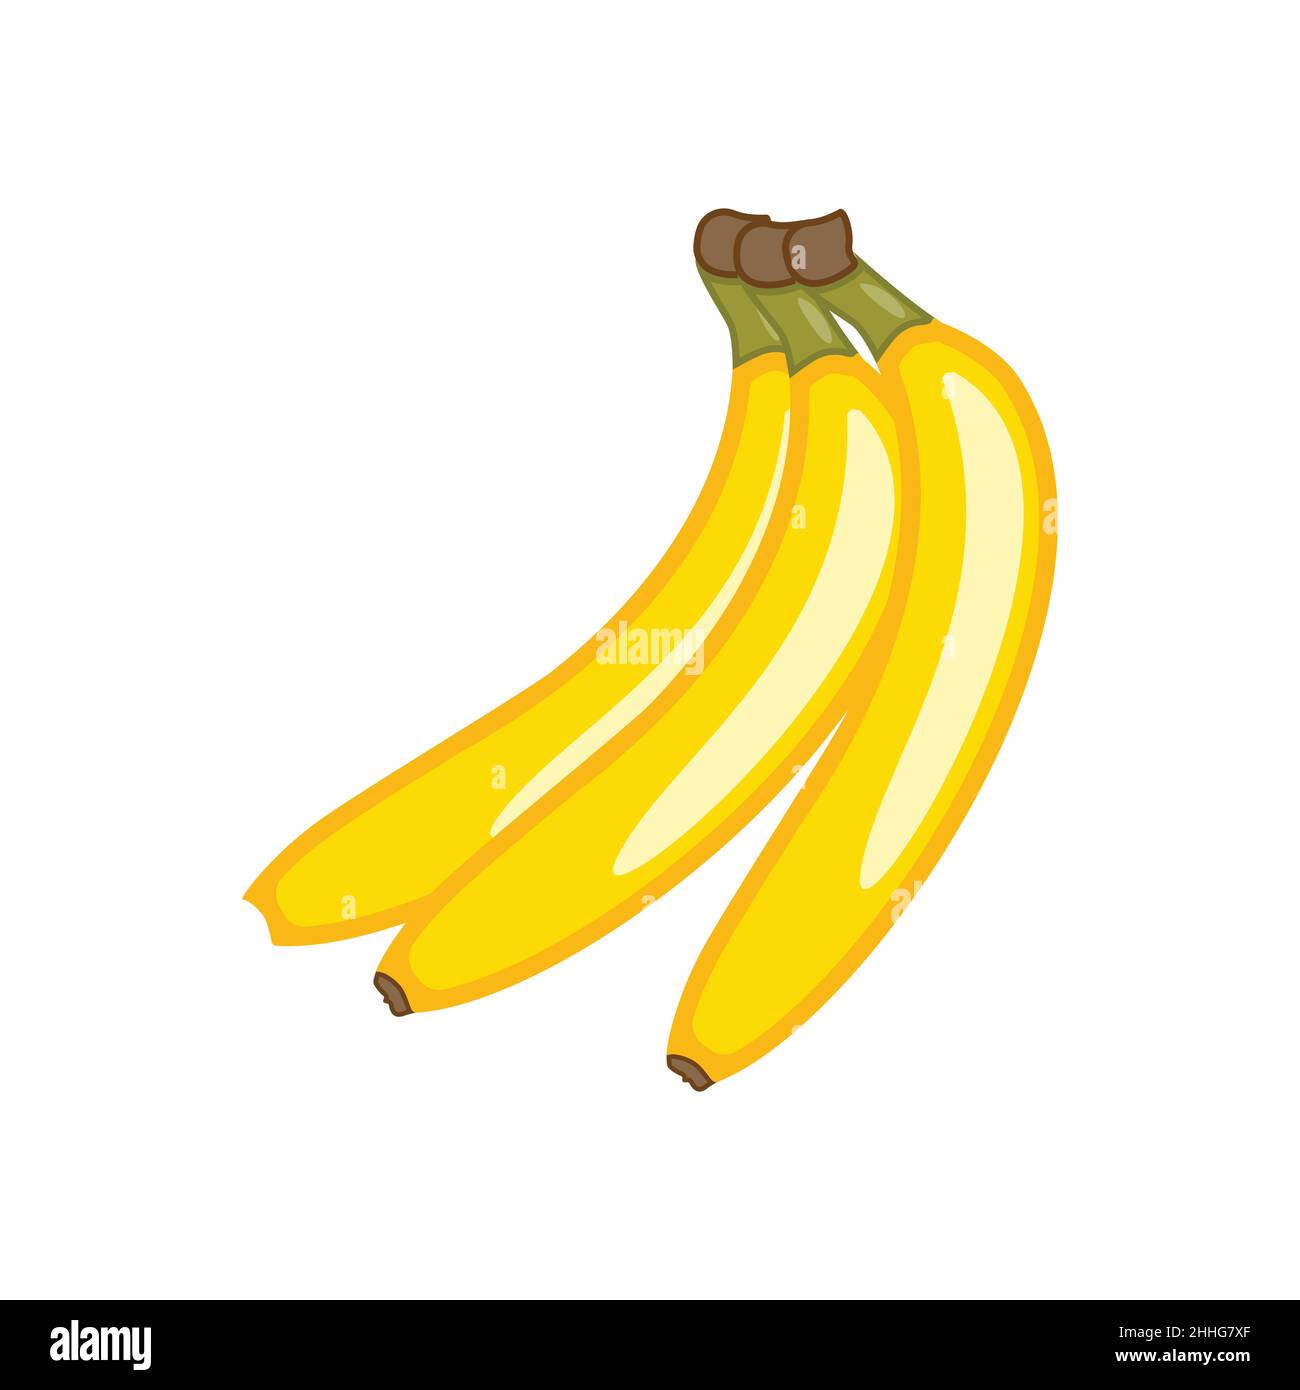 https://c8.alamy.com/comp/2HHG7XF/on-a-white-background-a-banana-fruit-vector-illustration-2HHG7XF.jpg